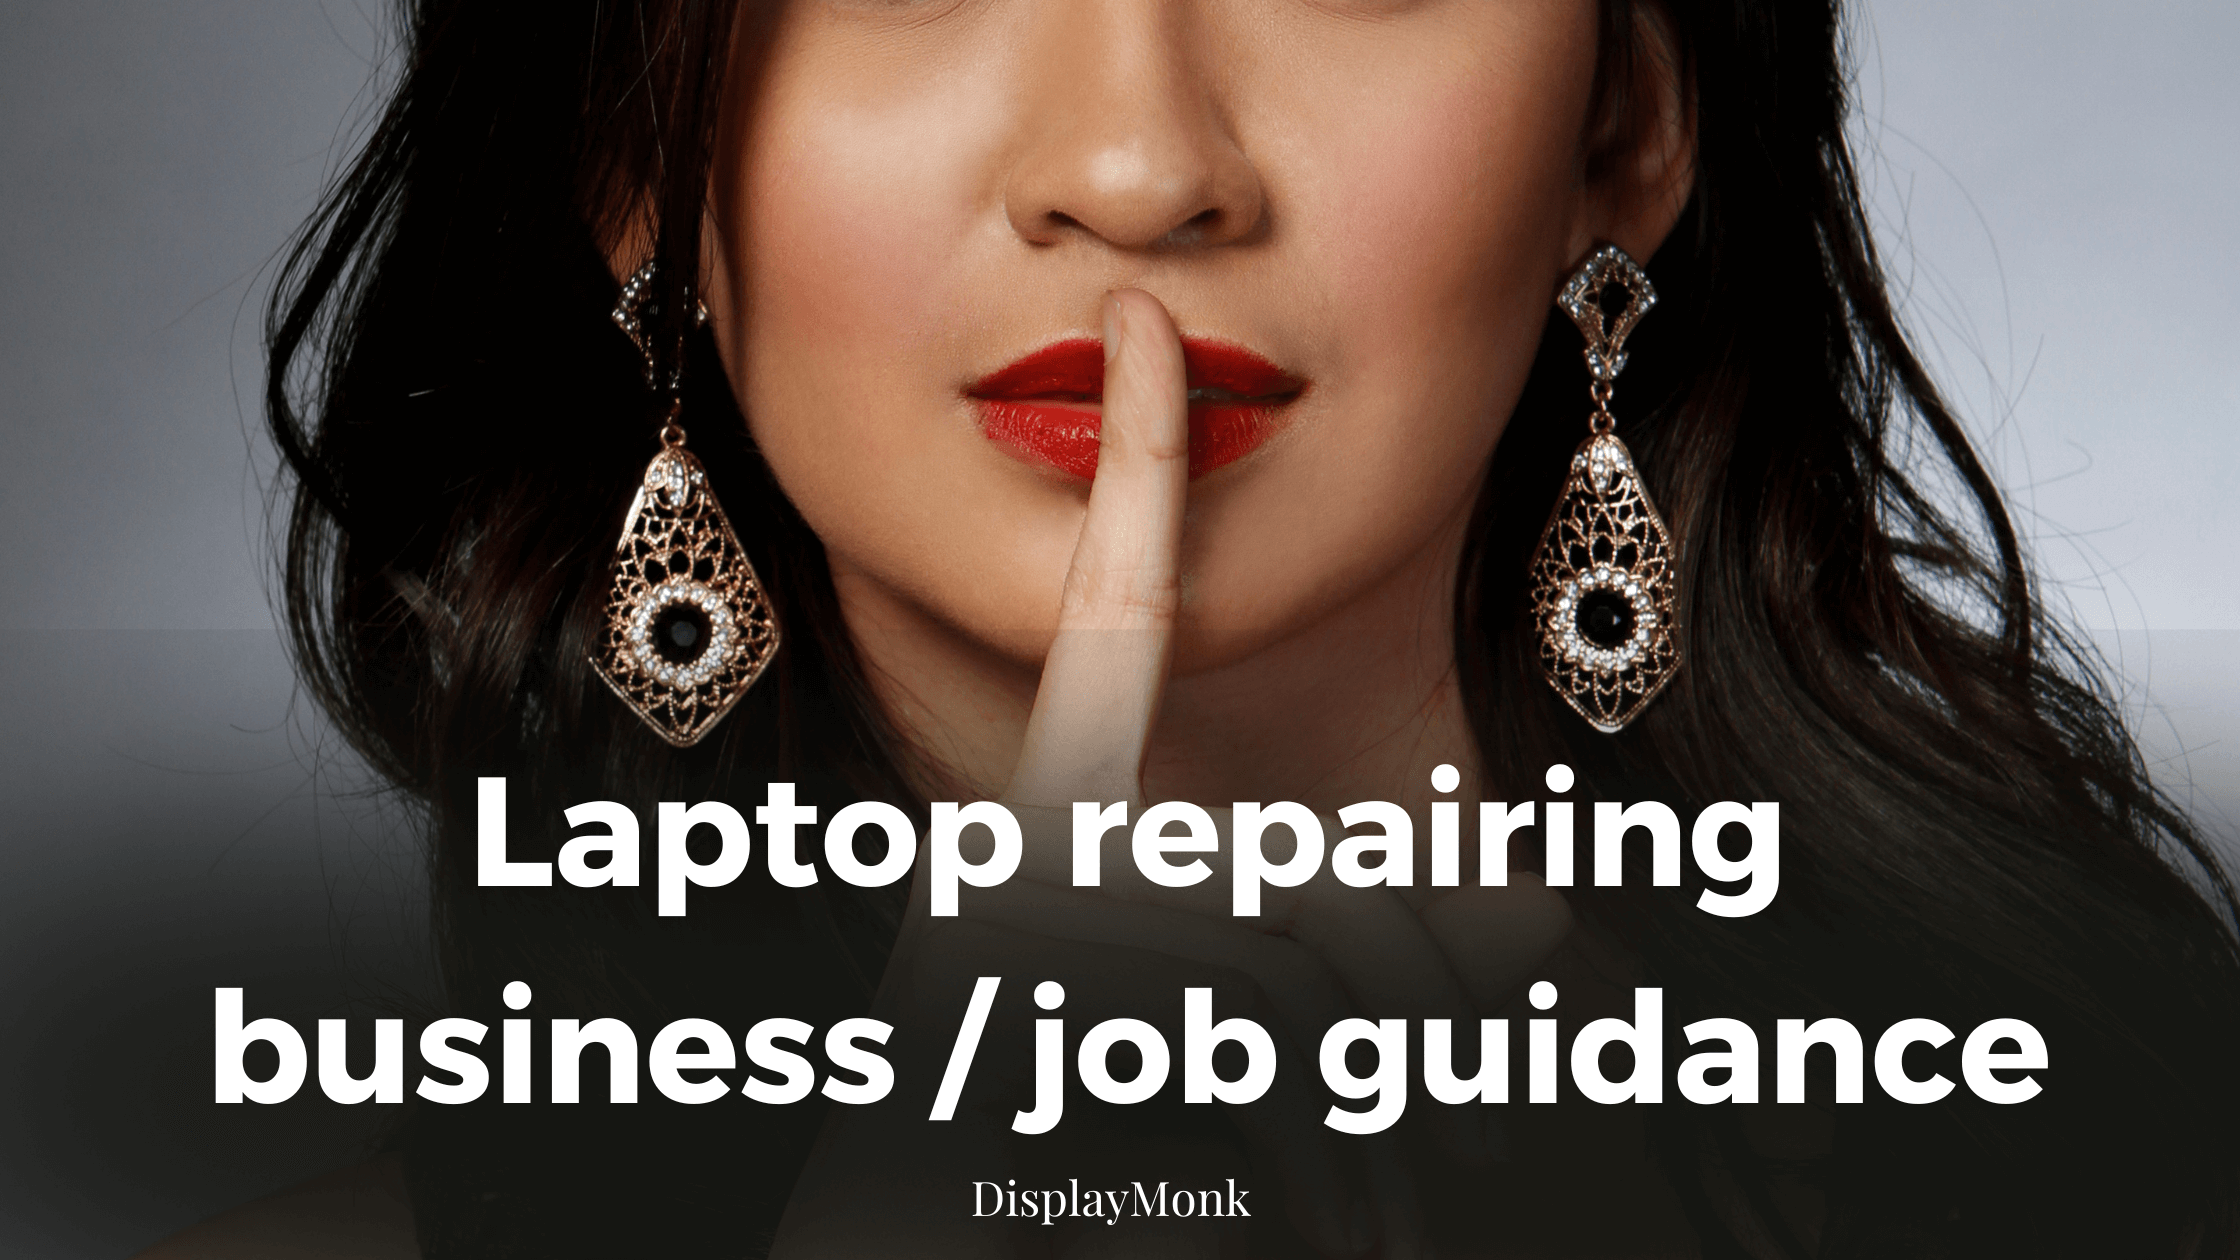 Laptop repairing business job guidance